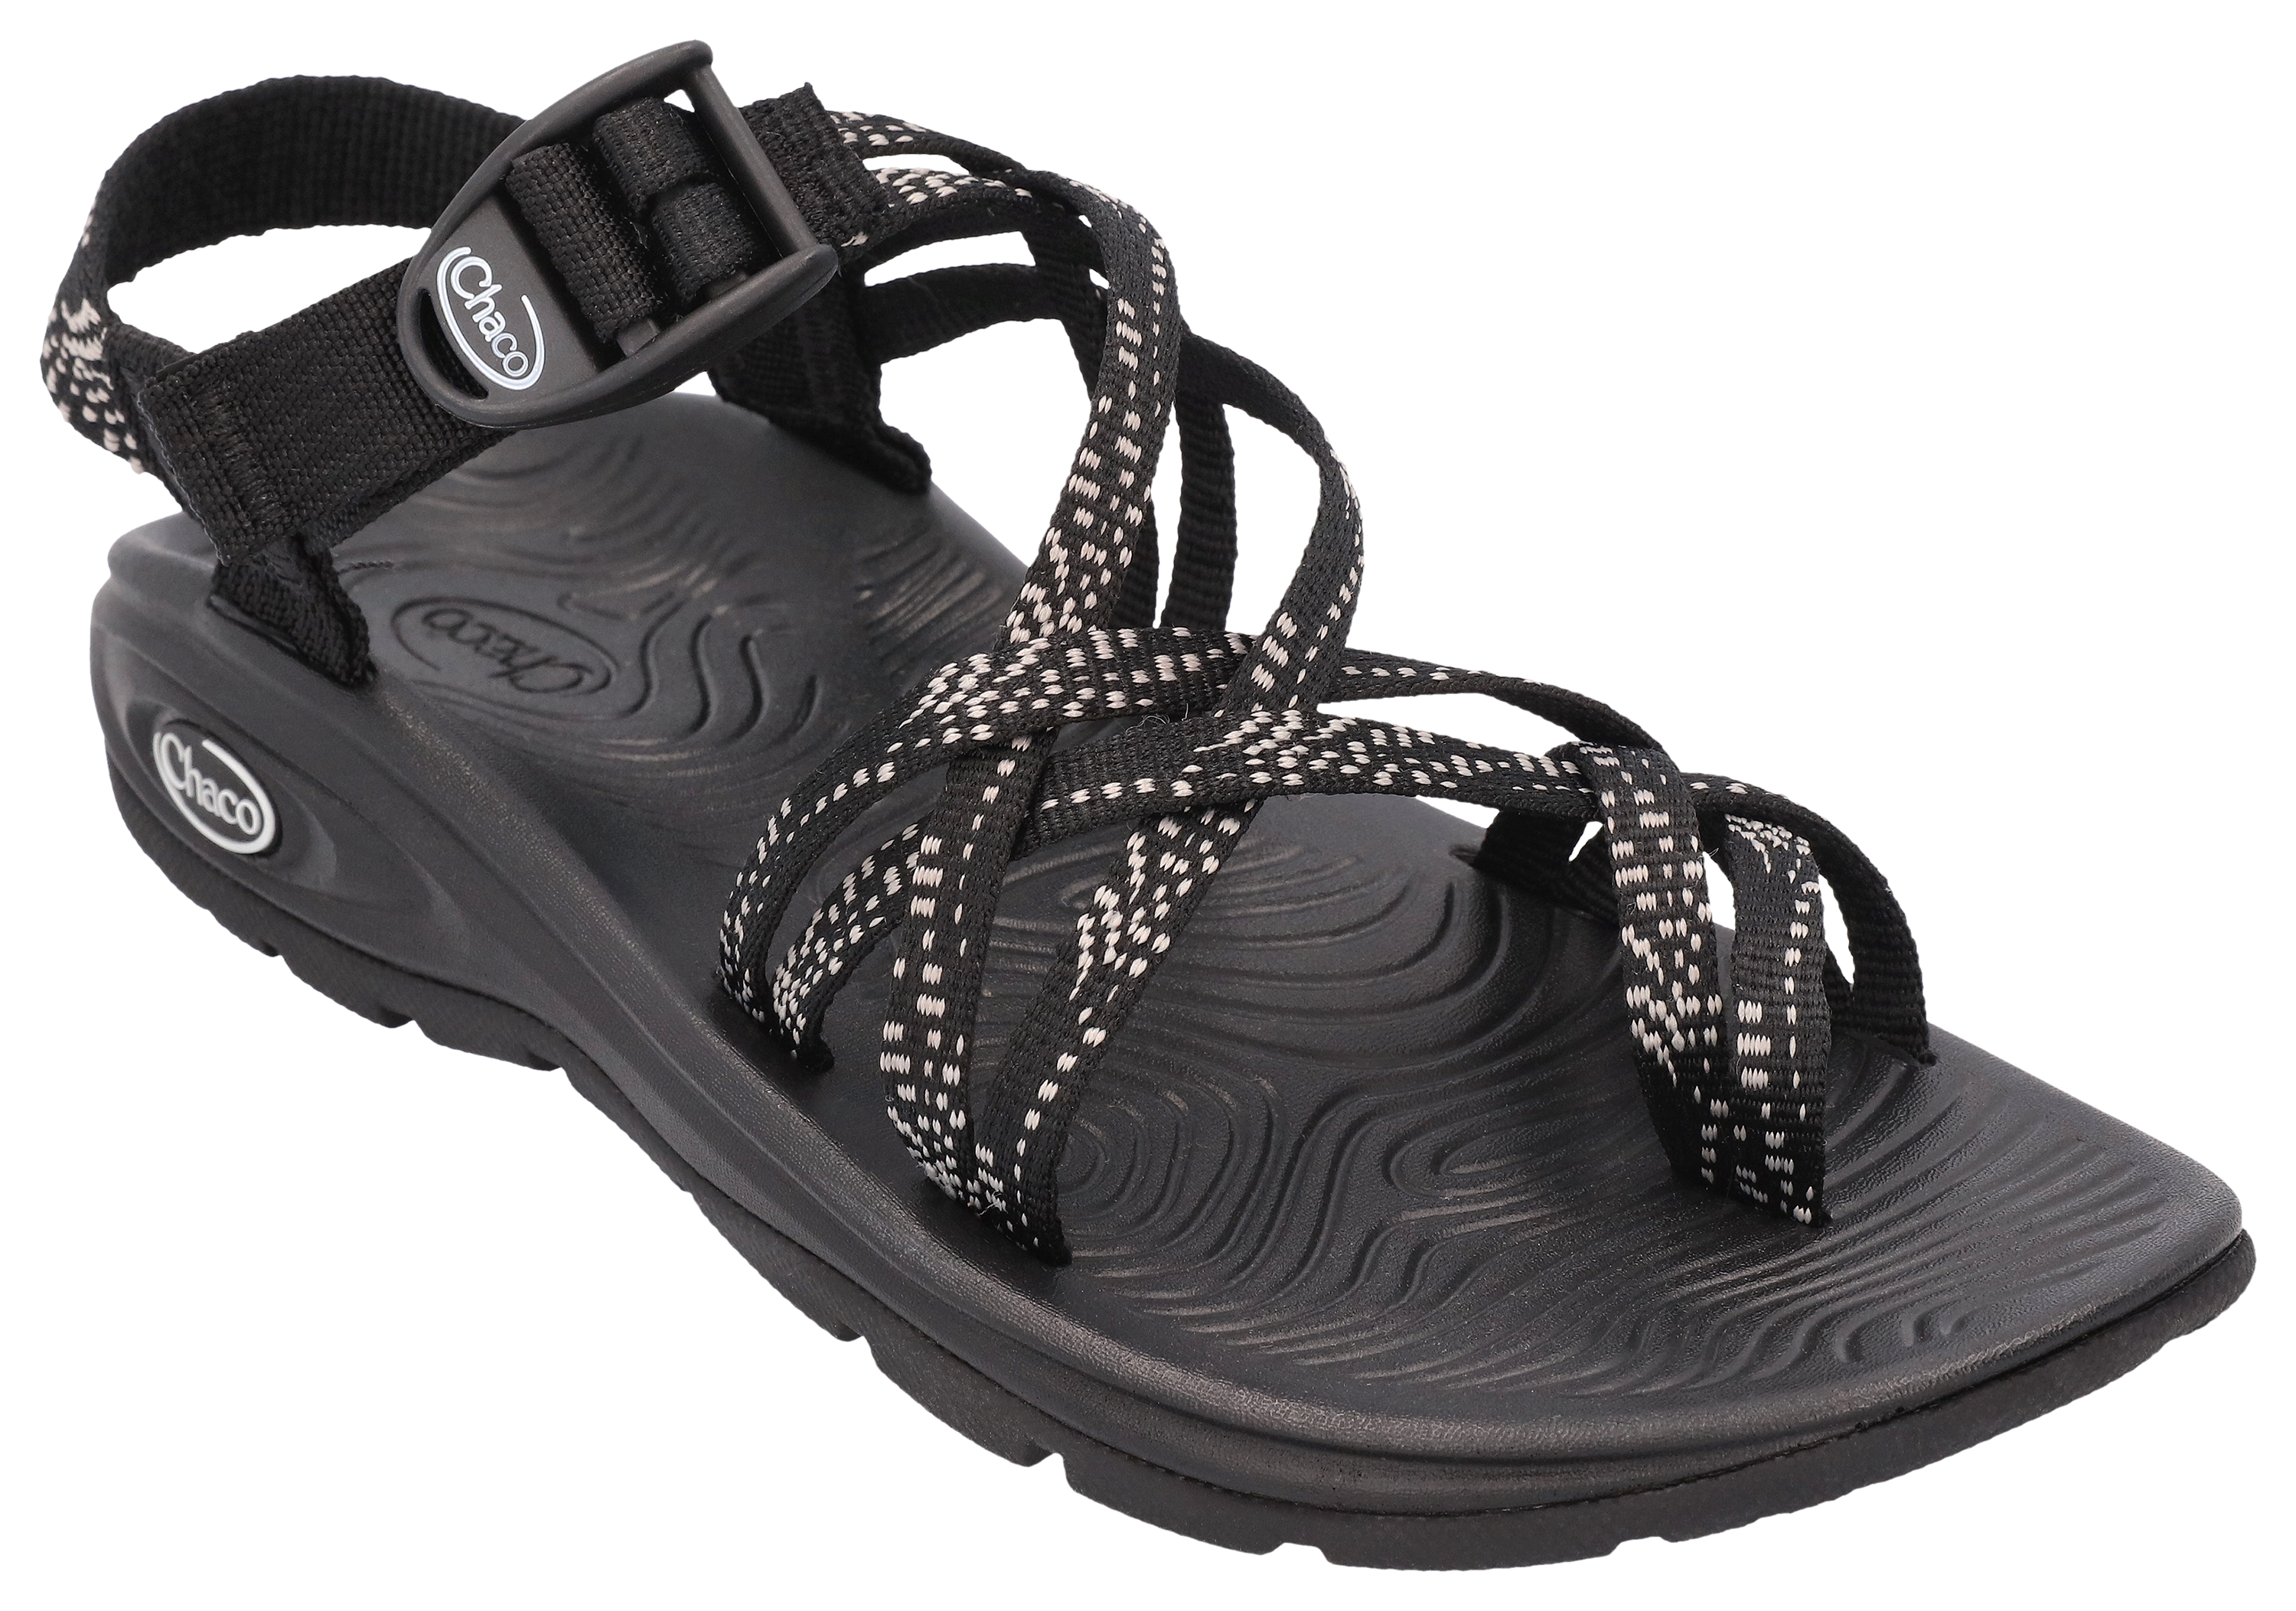 Chaco Z/Volv X2 Sandals for Ladies - Dash Black - 11M